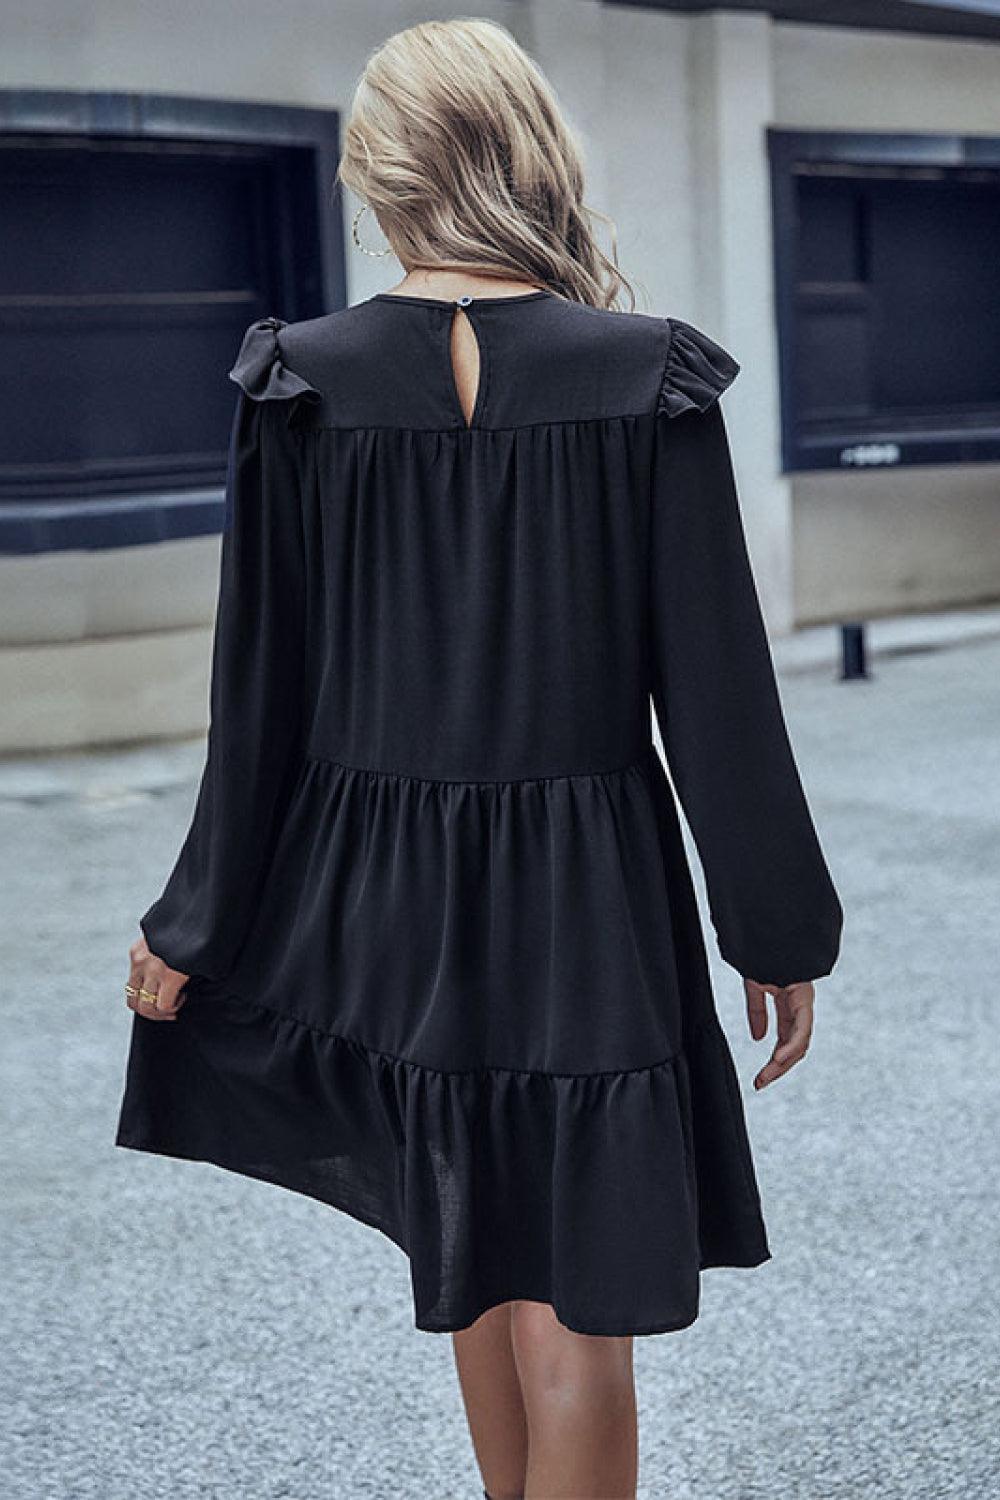 Empowered Woman Black Tiered Dress - MXSTUDIO.COM